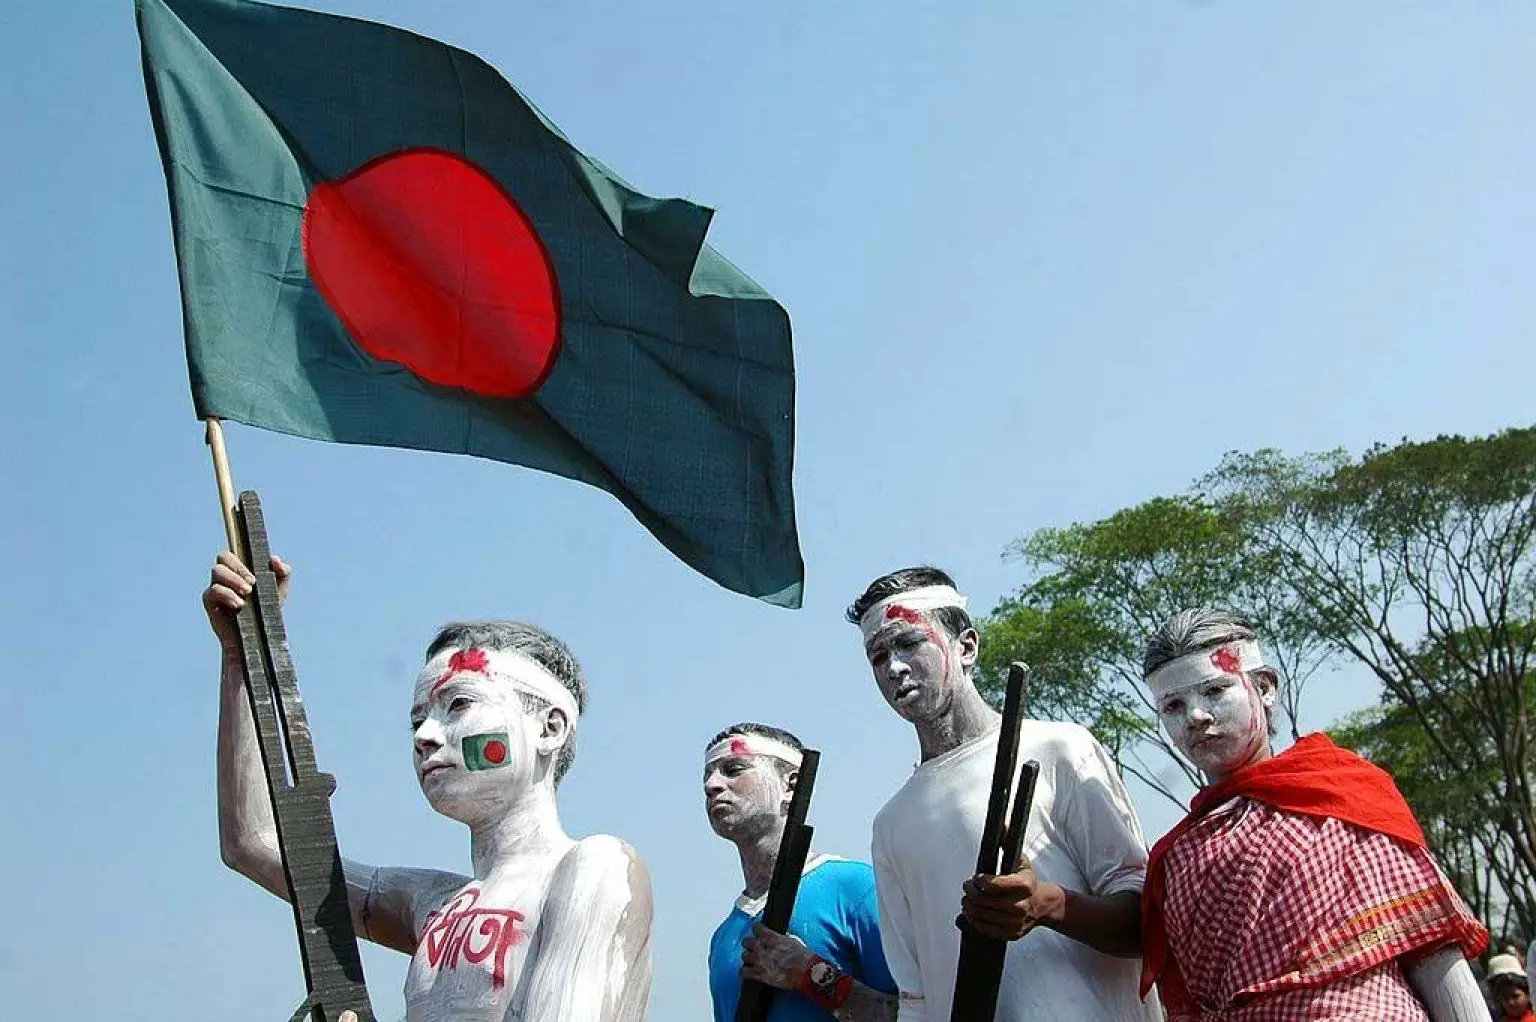 victory day bangladesh